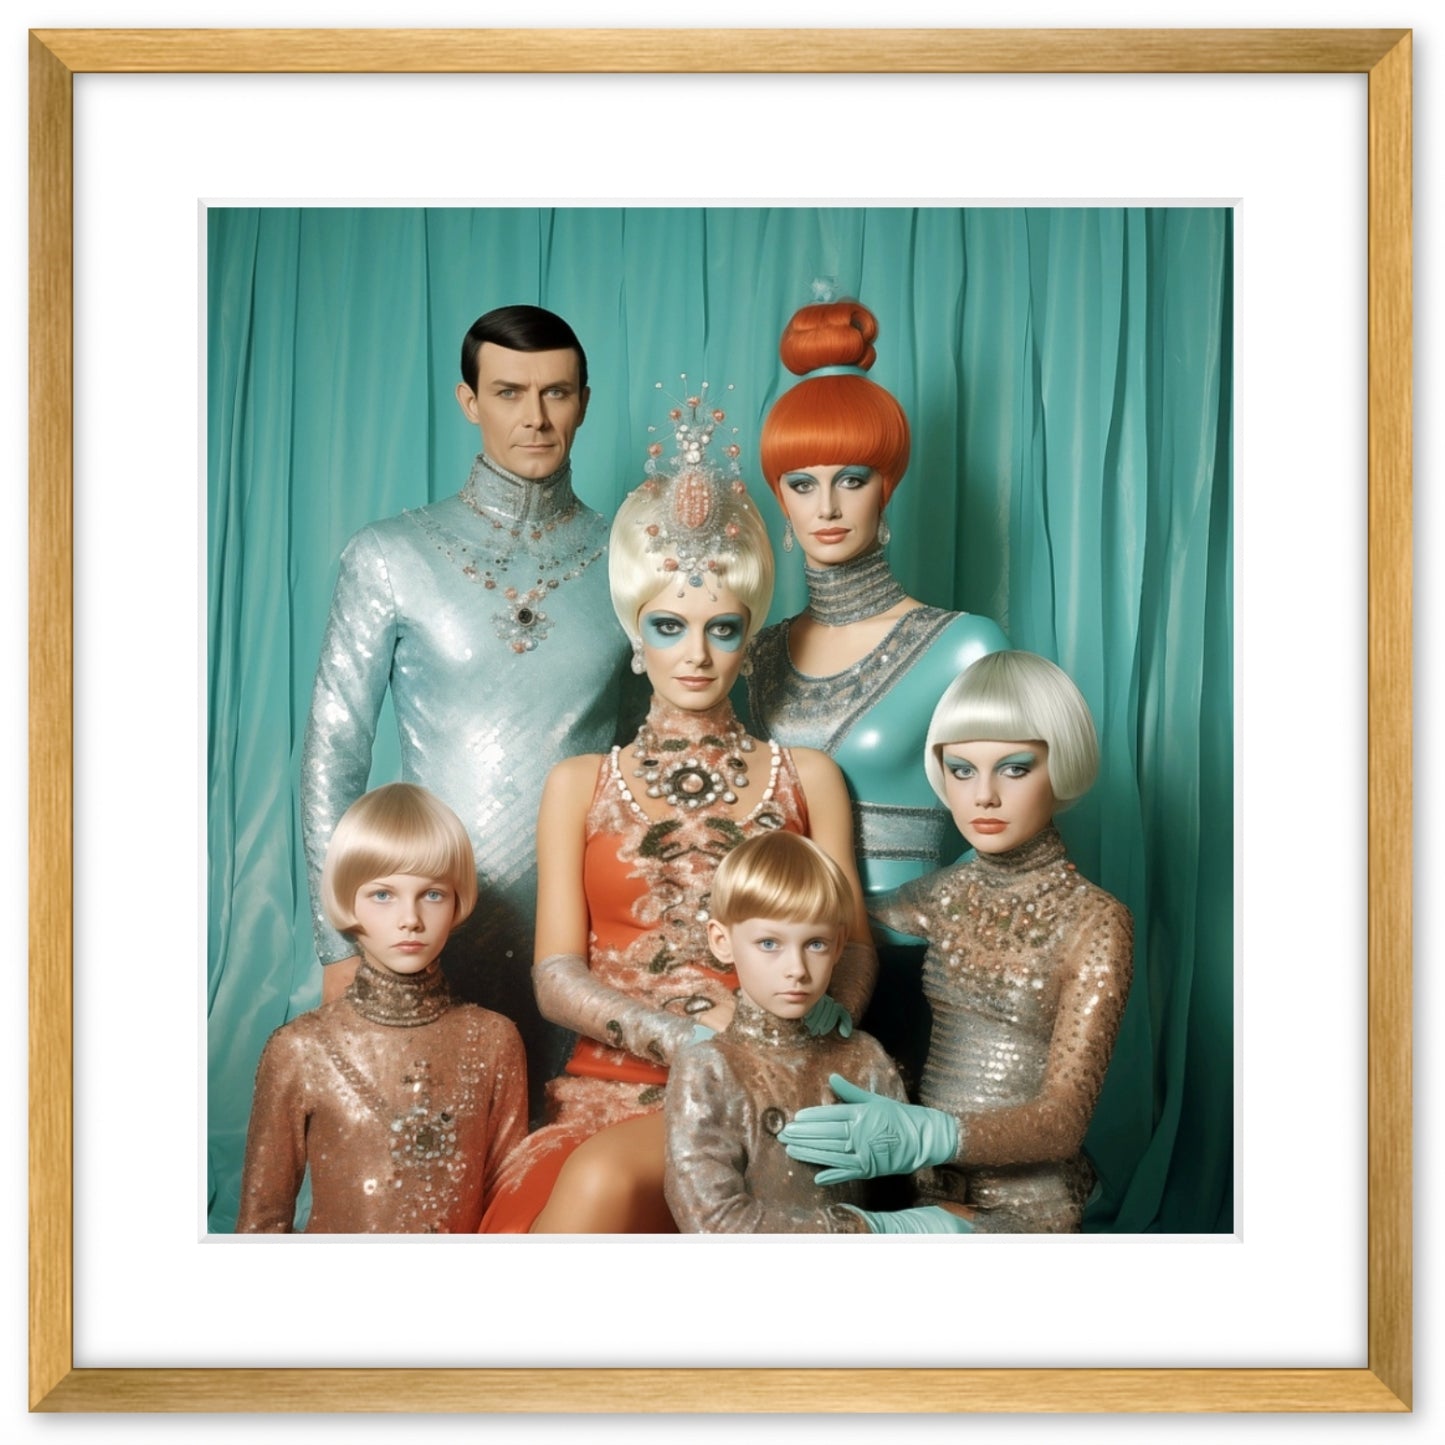 "Not the Jetsons: Intergalactic Family Portrait"